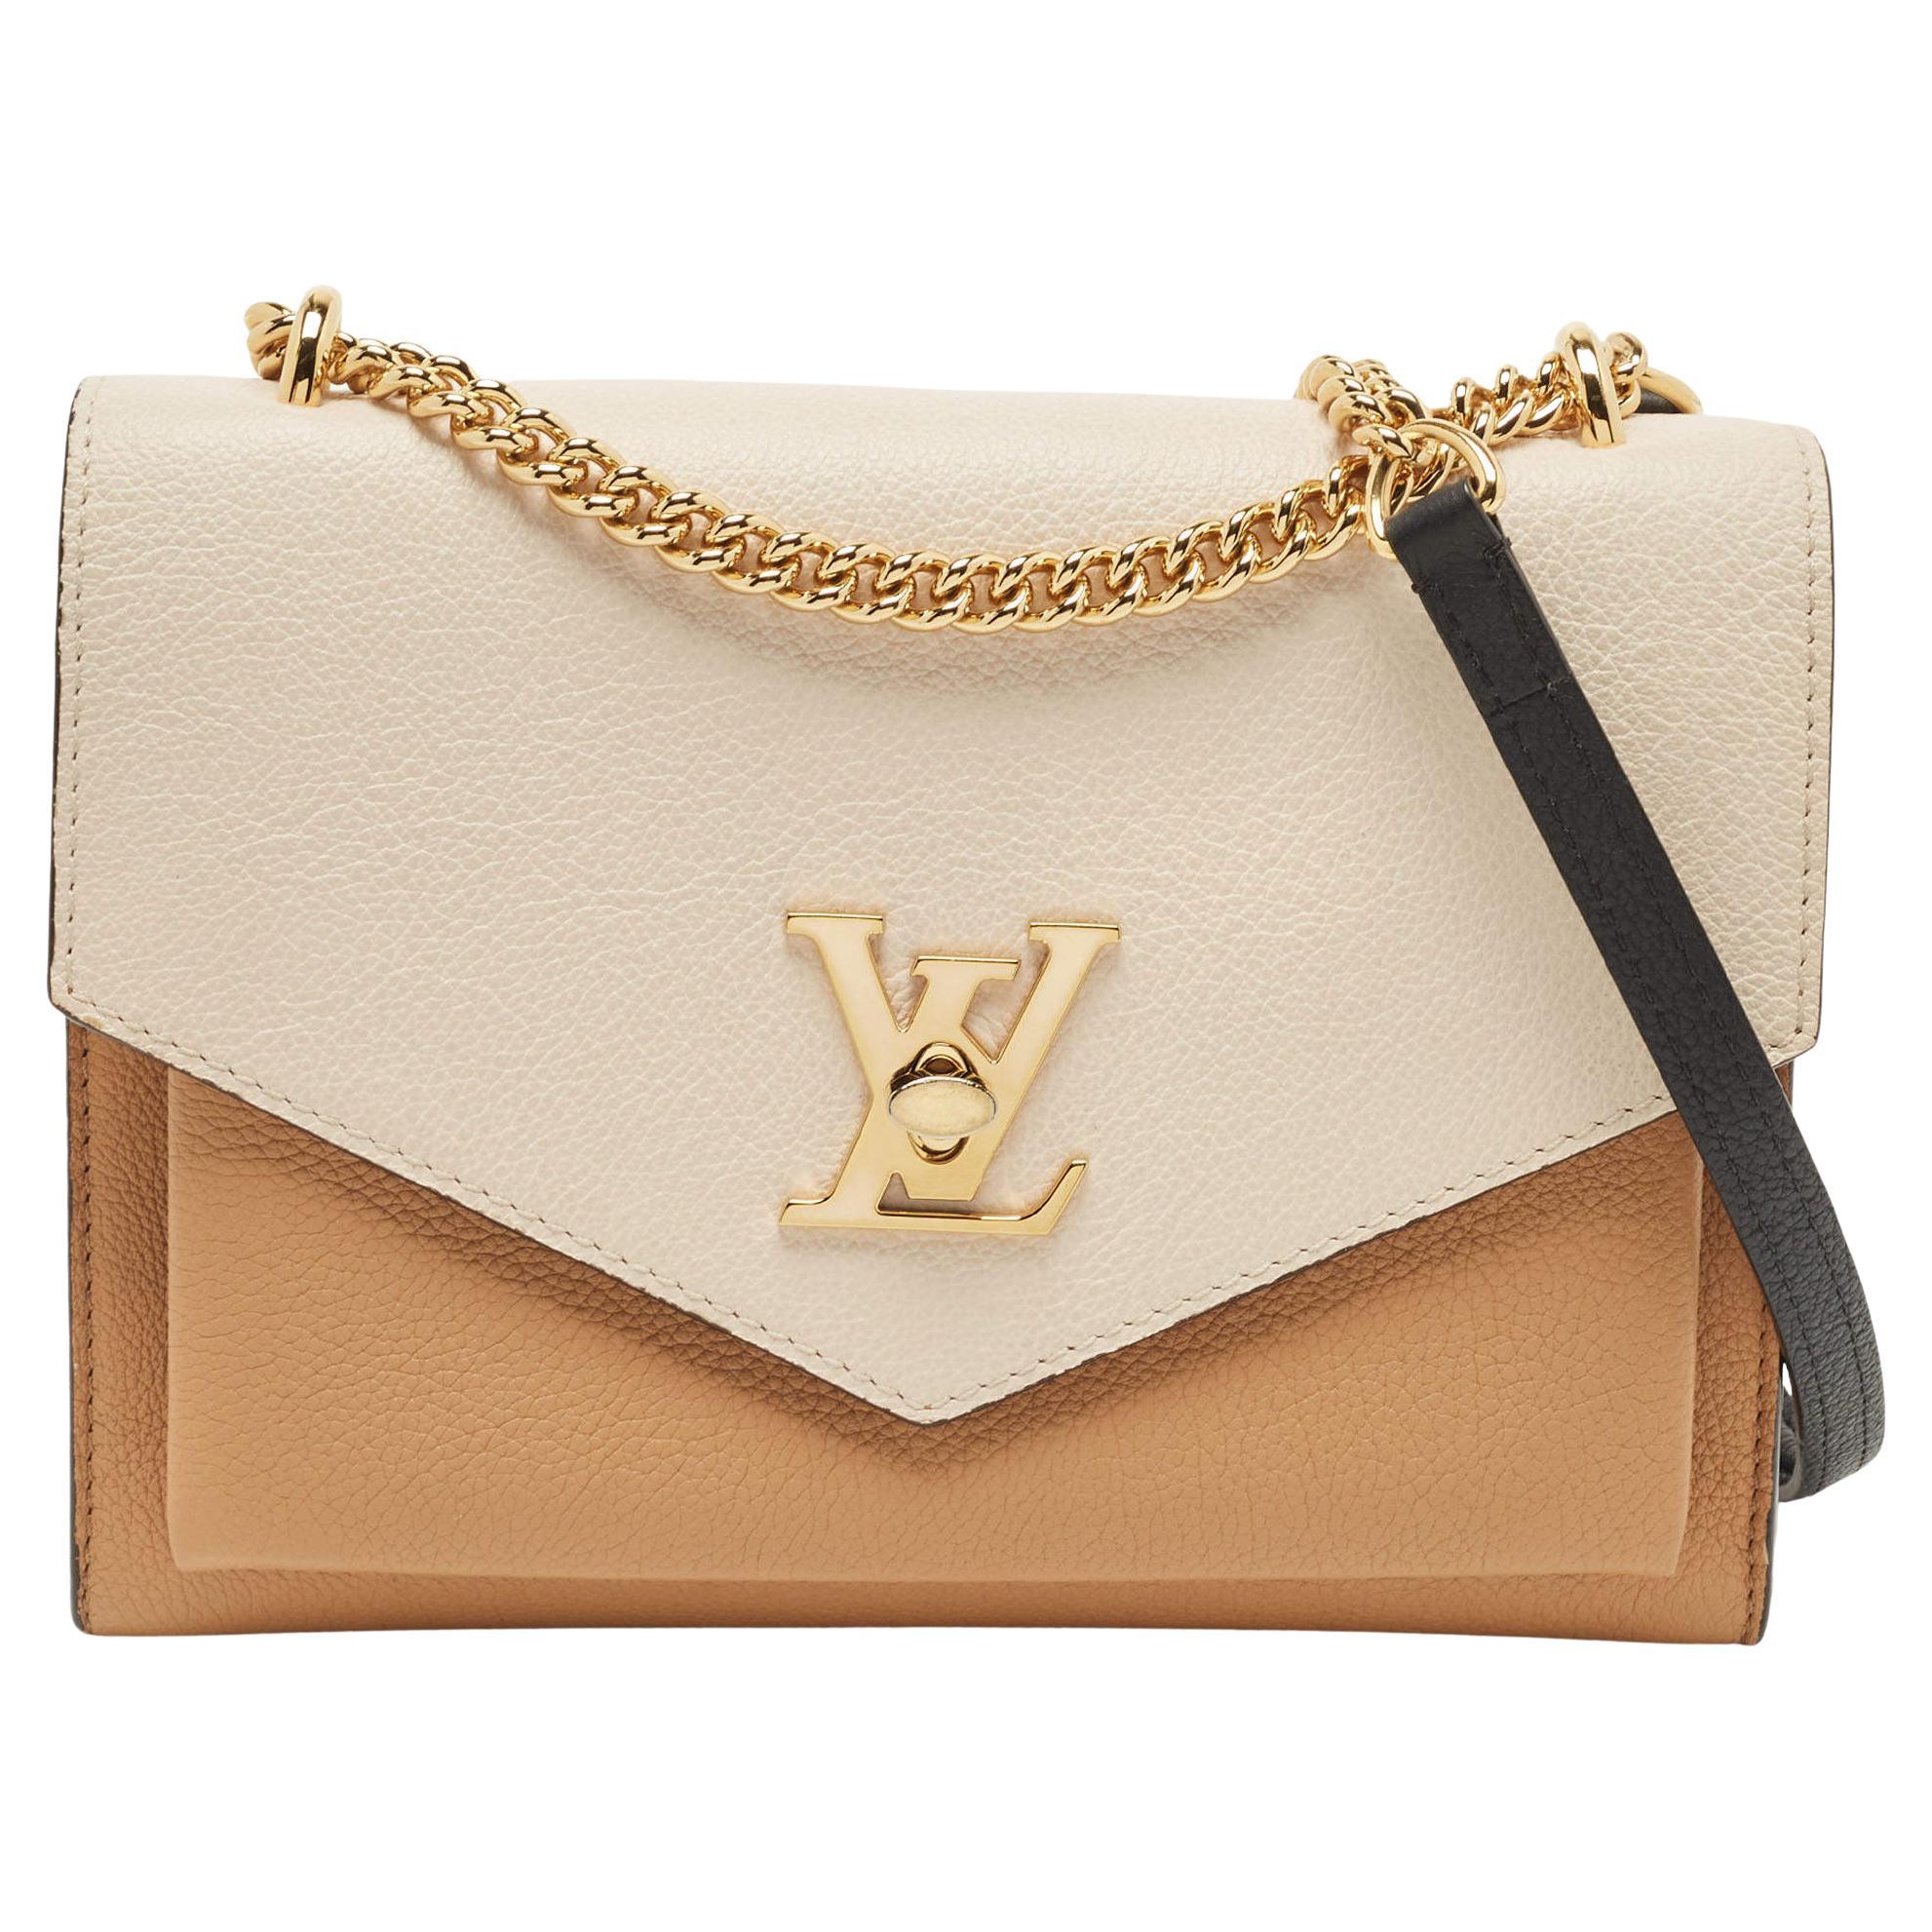 Louis Vuitton Arizona - 3 For Sale on 1stDibs